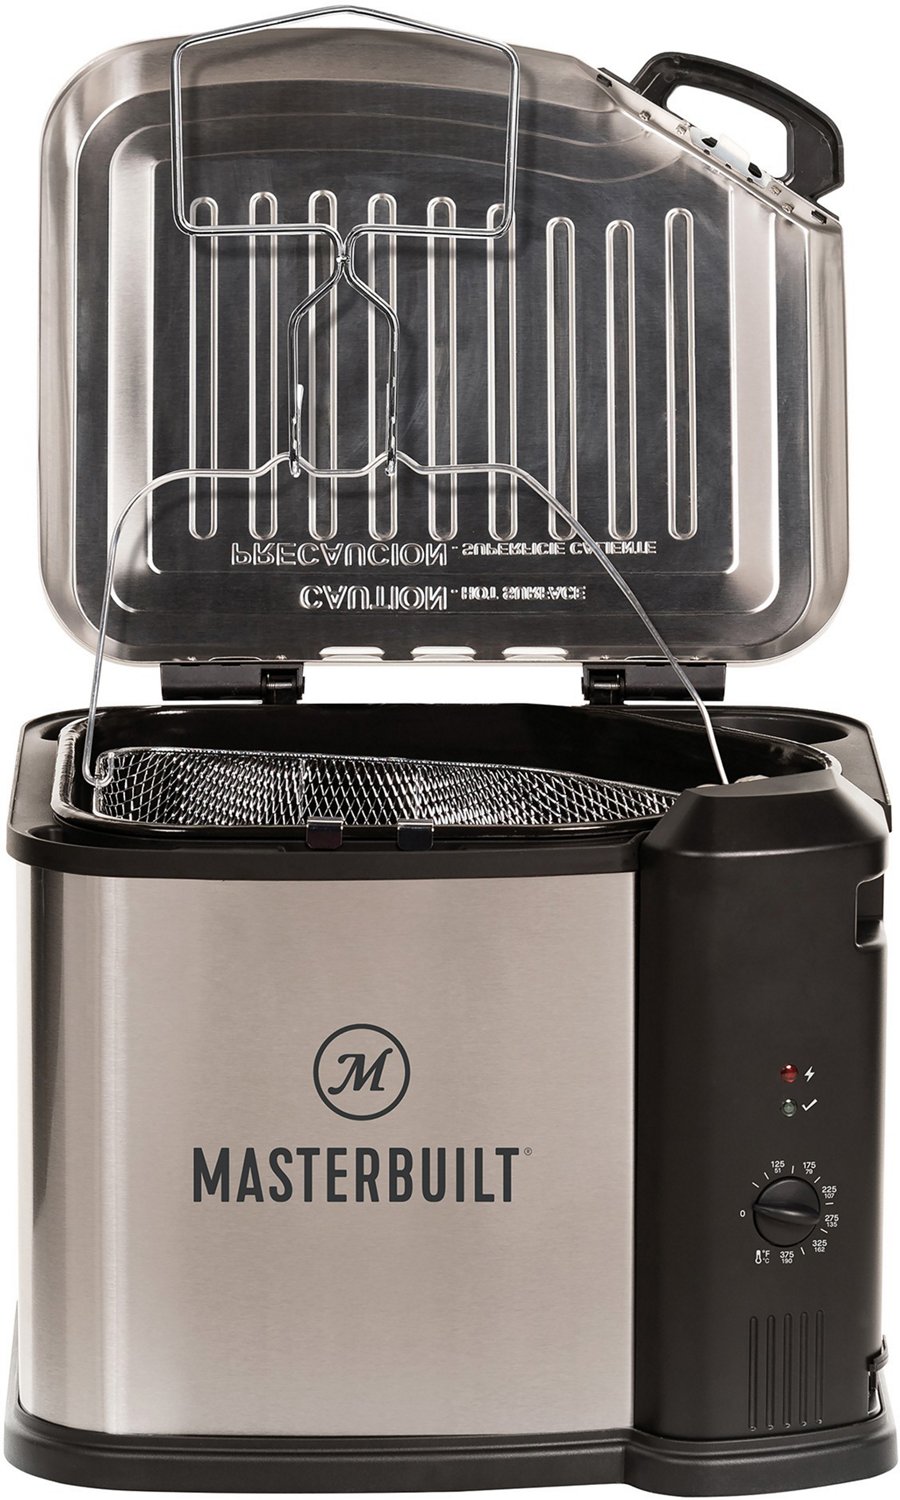 Masterbuilt XL Electric Fryer